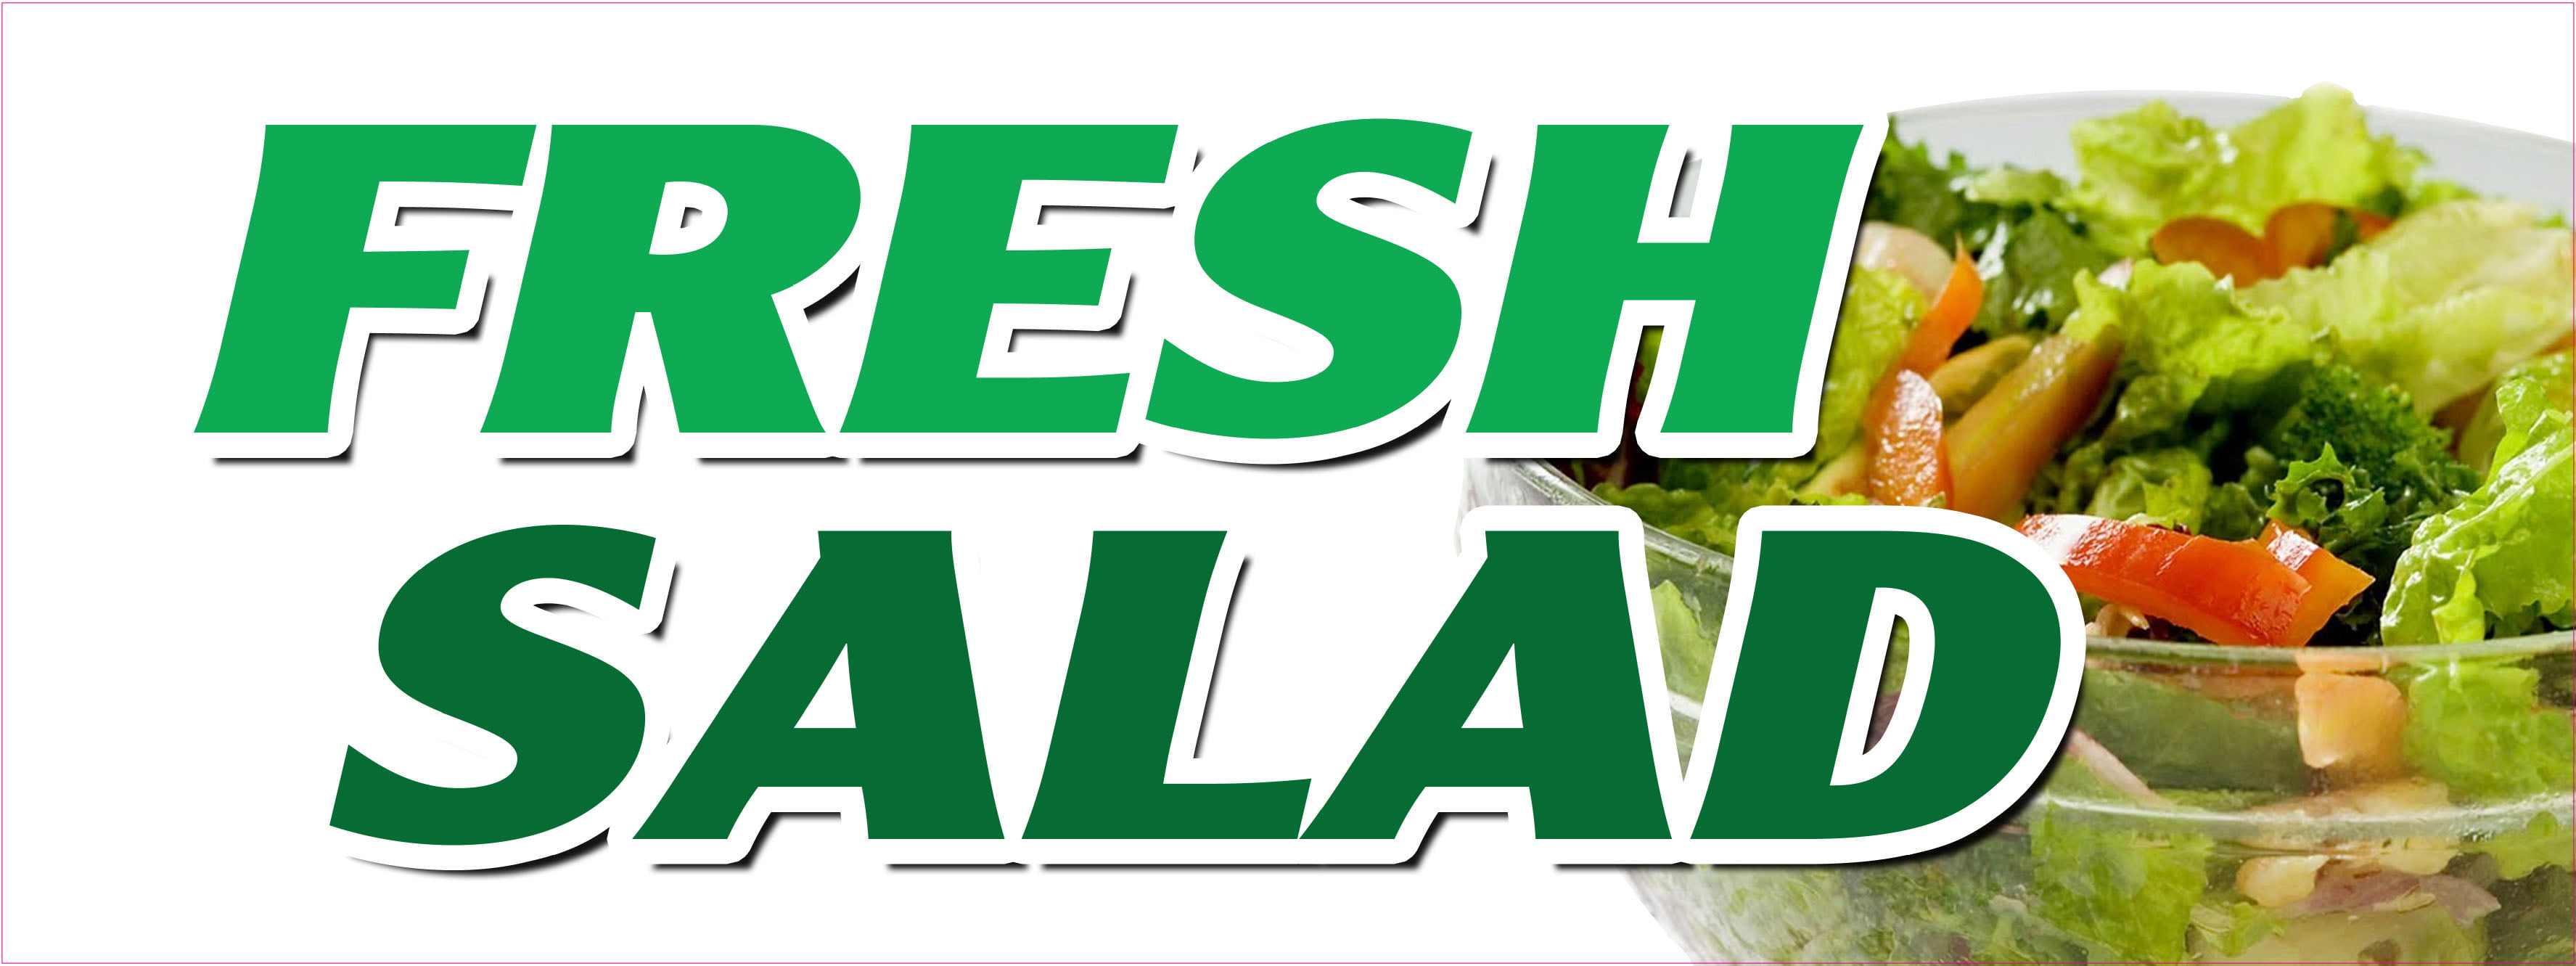 Salad Fresh Crisp DECAL Food Truck Concession Vinyl Sticker CHOOSE YOUR SIZE 